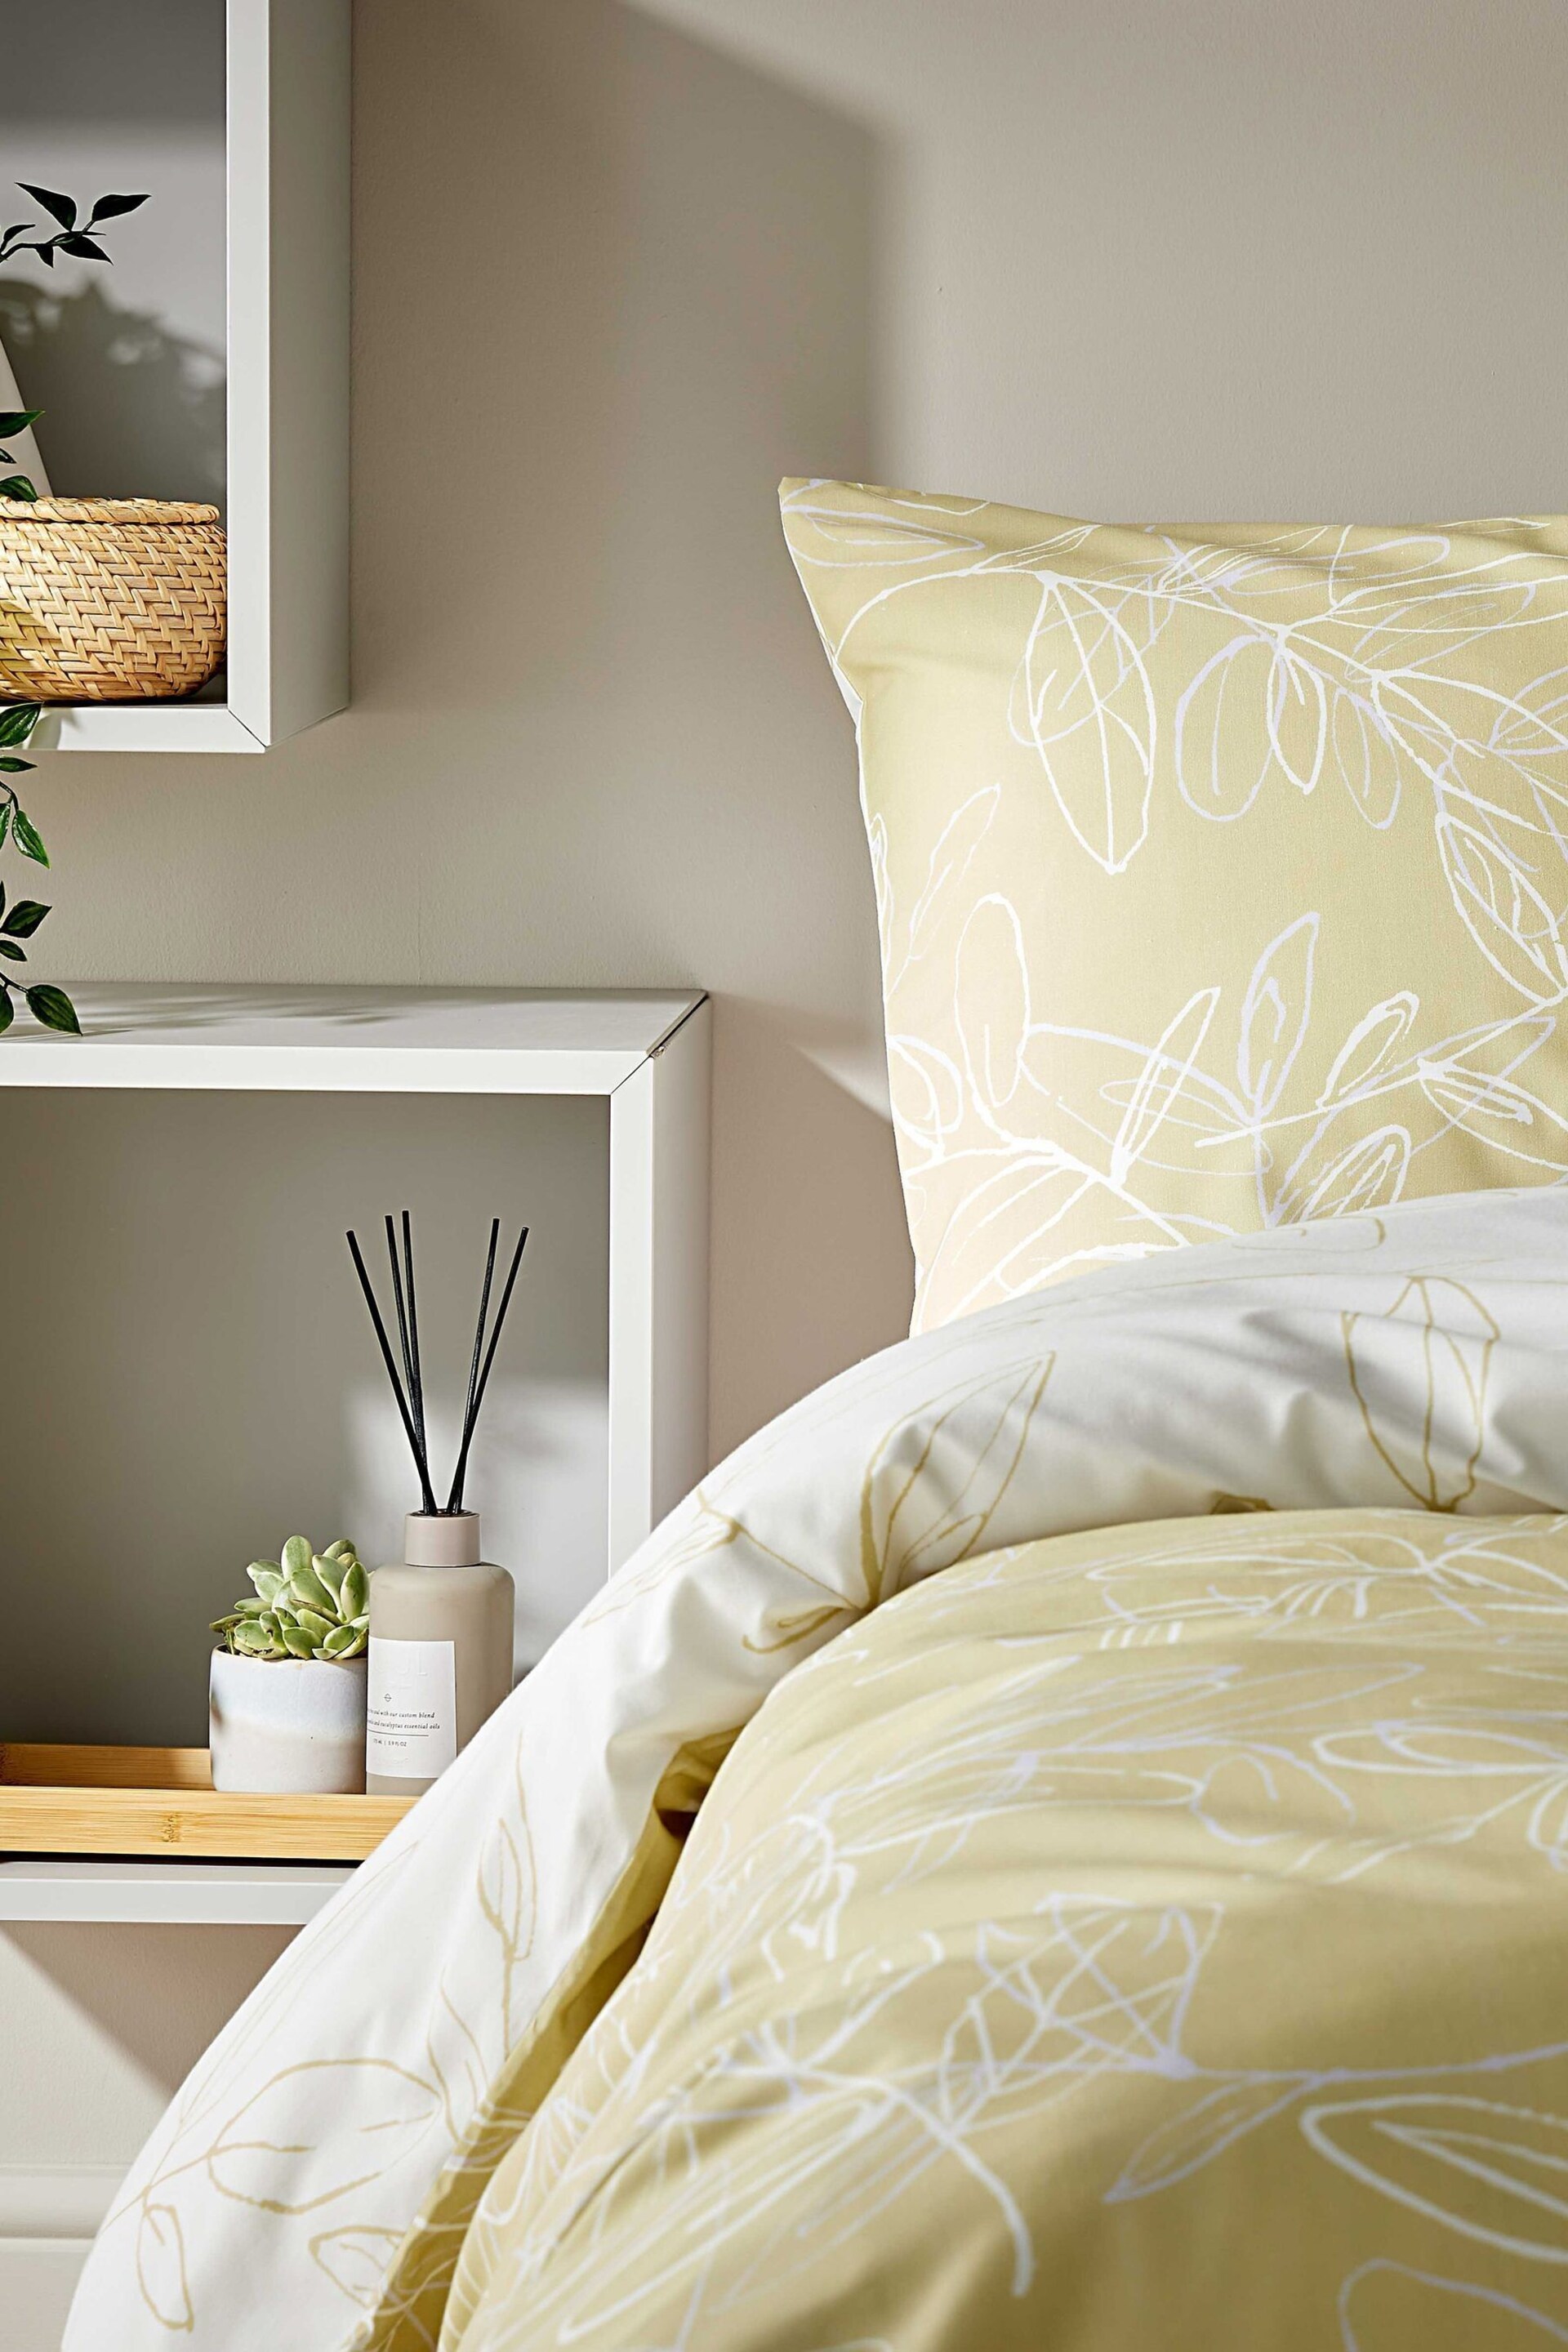 Vantona Cream Linear Leaves Duvet Cover and Pillowcase Set - Image 2 of 4